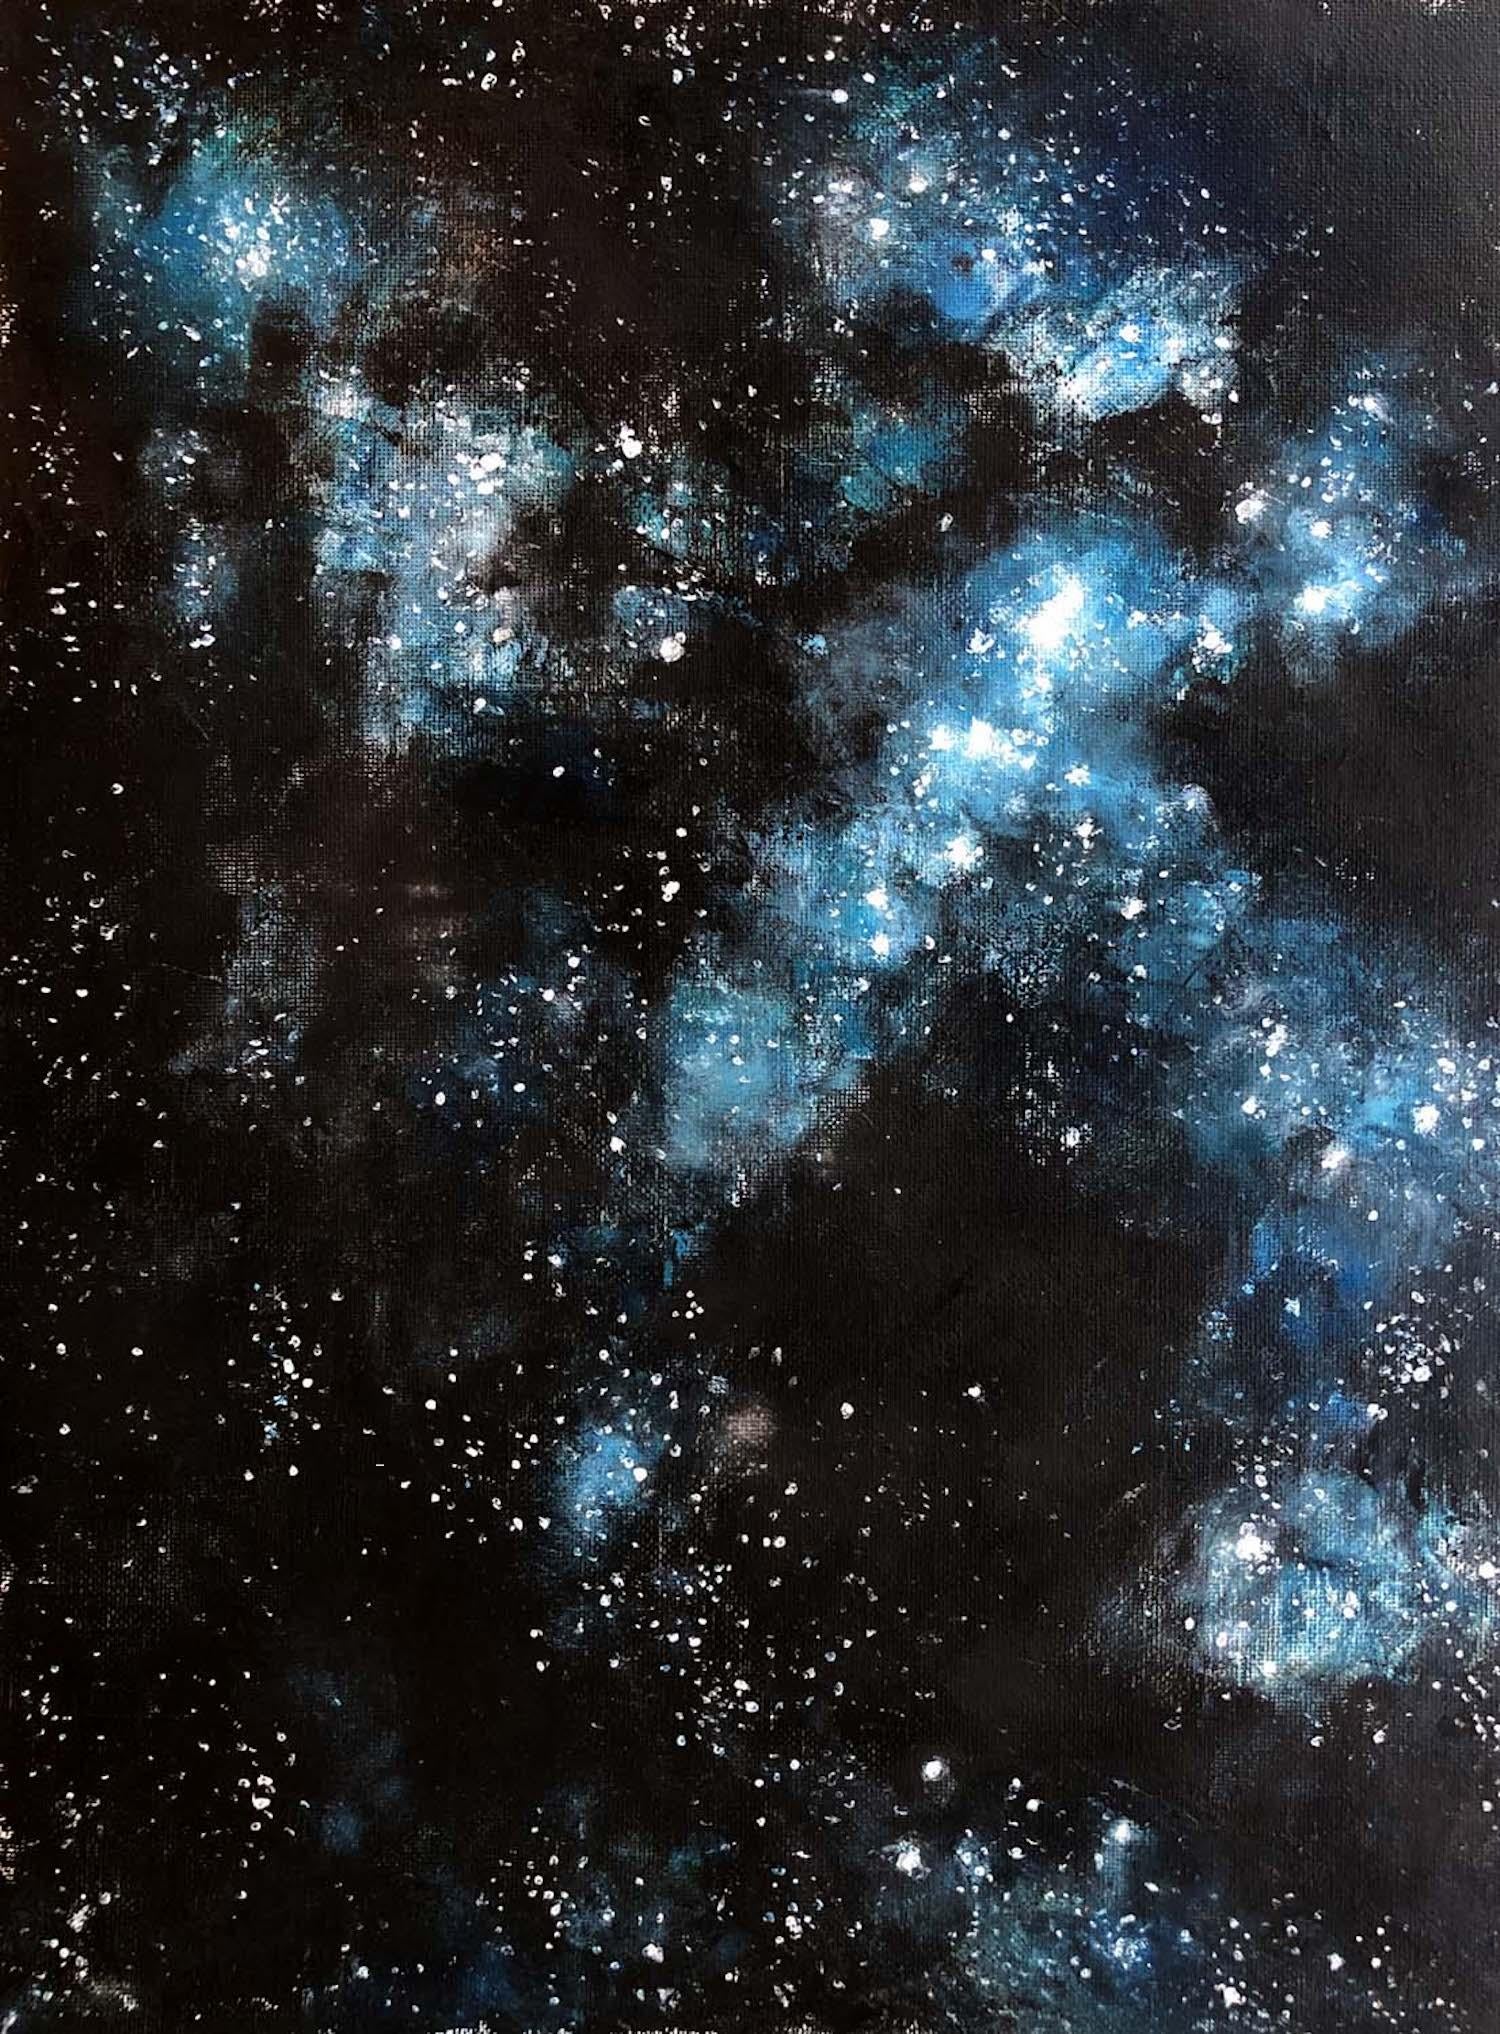 Under the Milky Way, Original Painting - Mixed Media Art by Tiffany Blaise